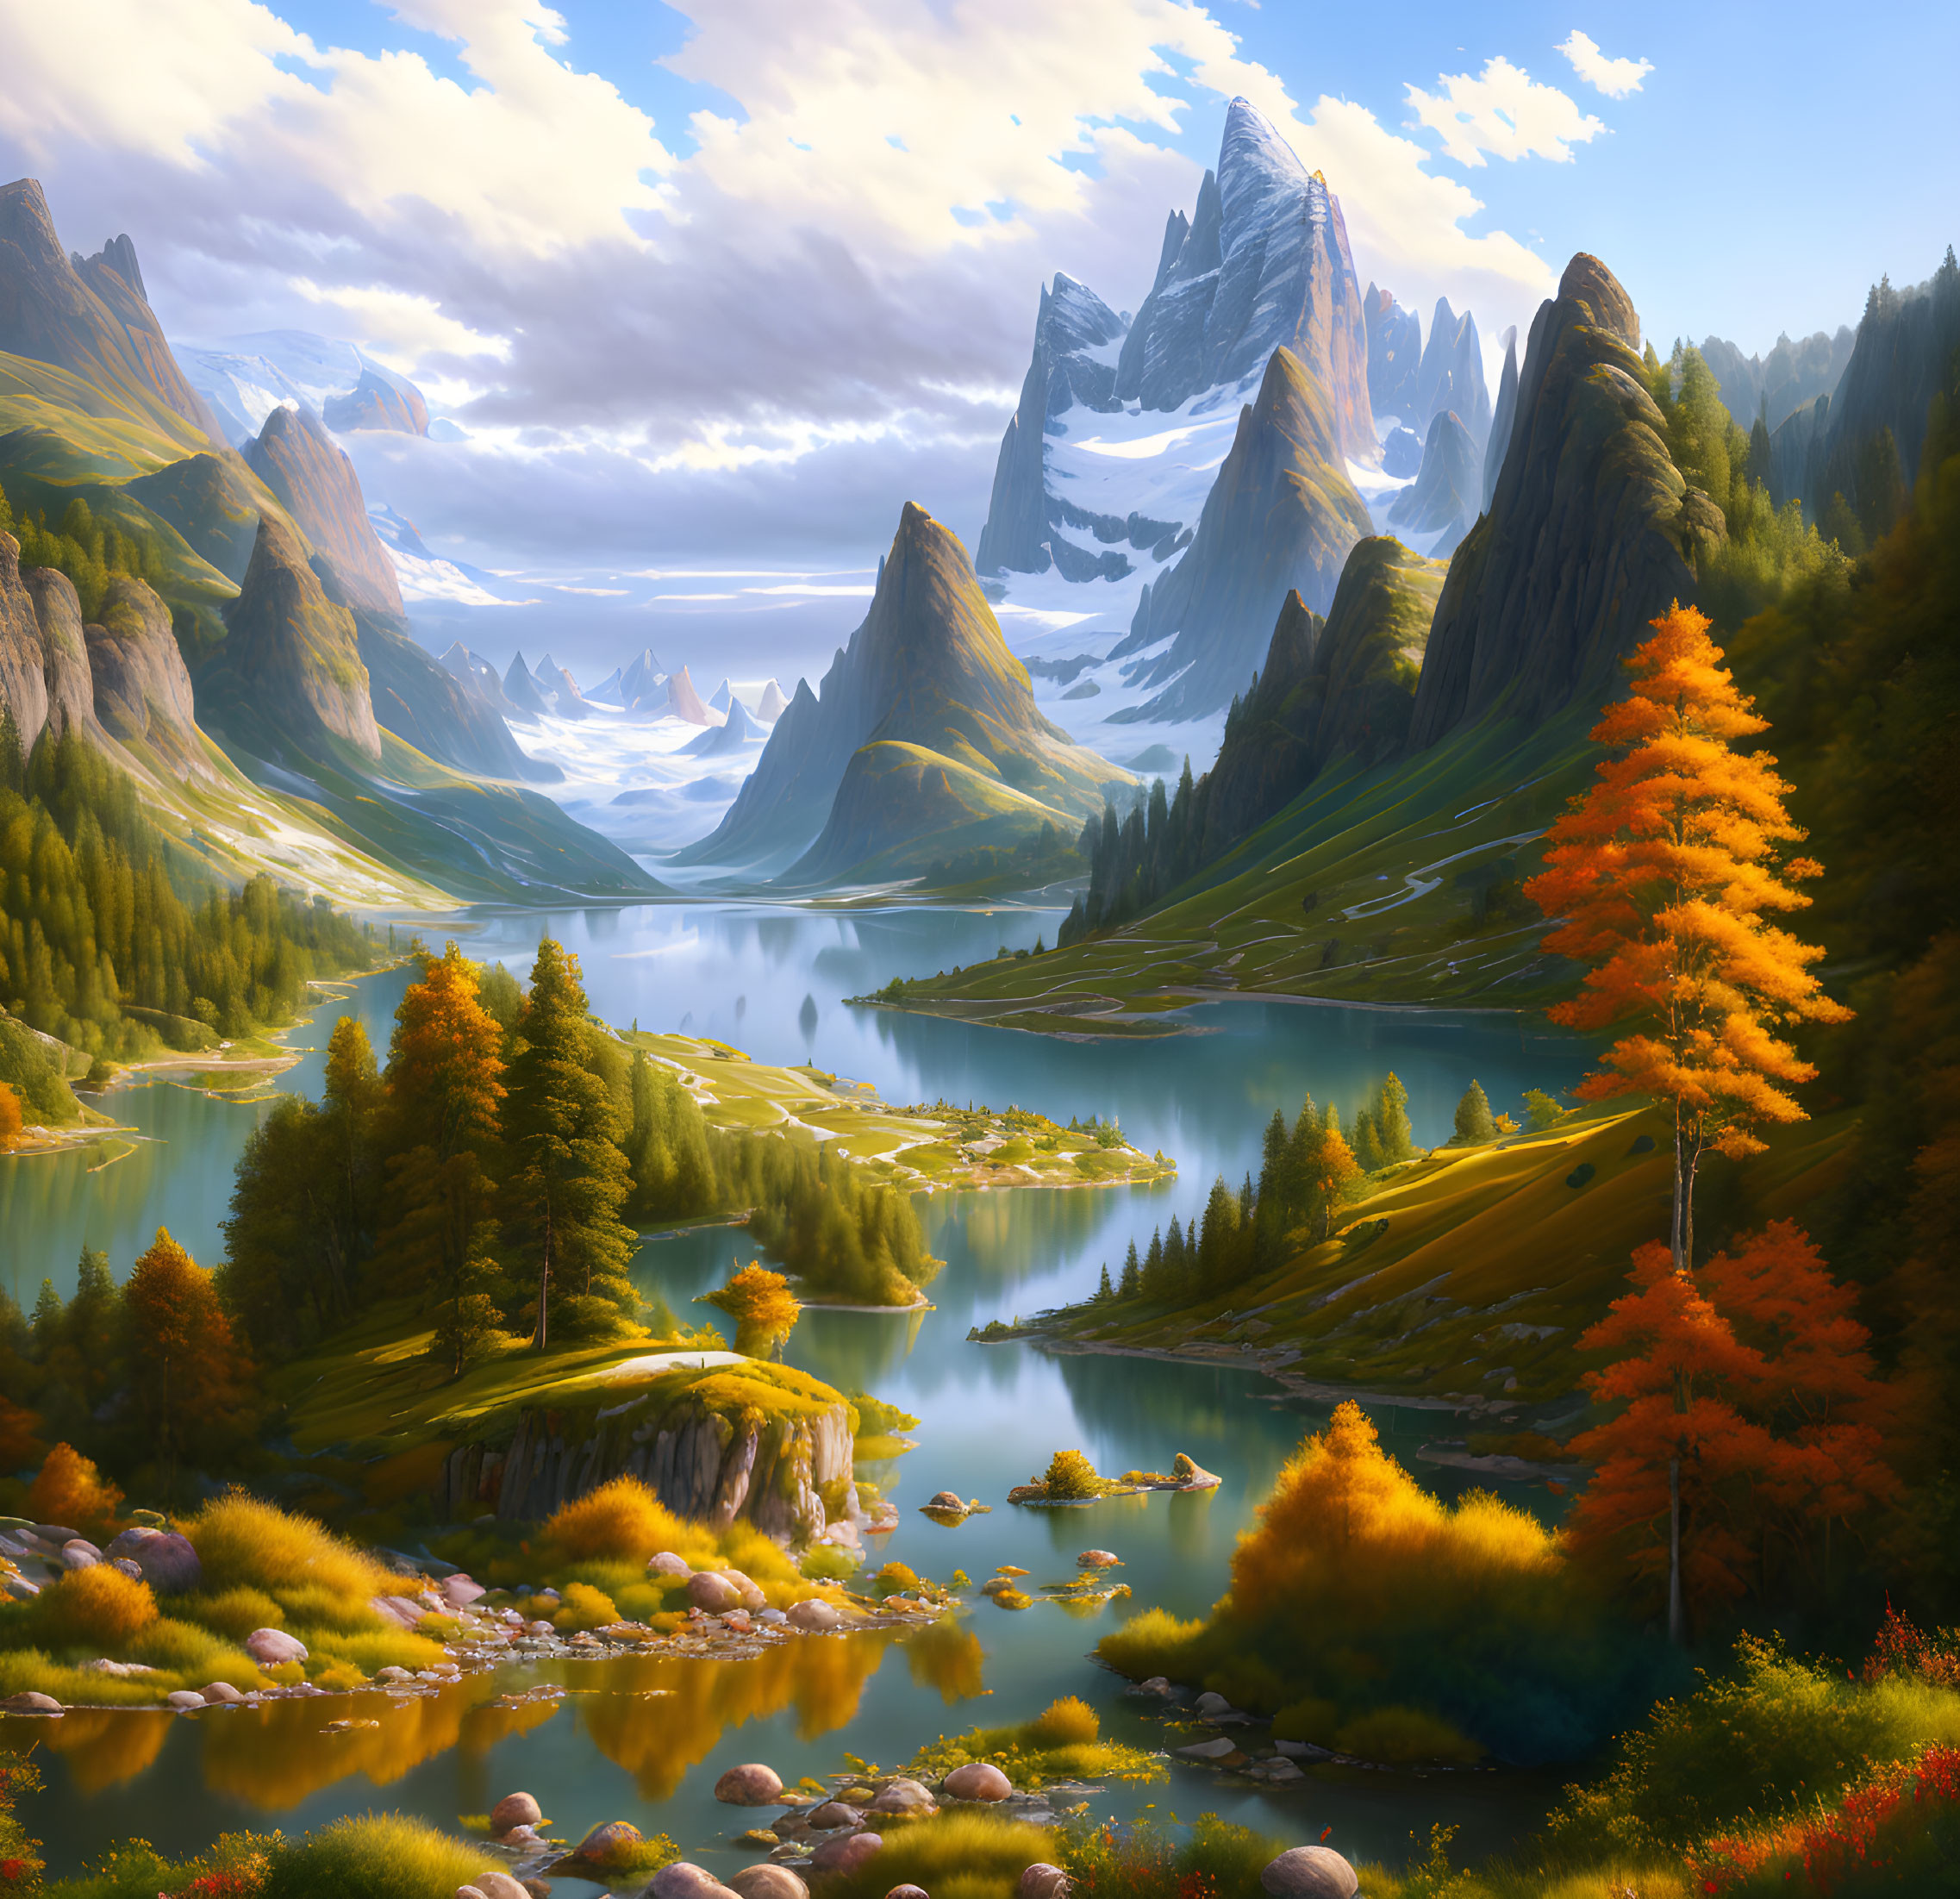 Autumn landscape: vibrant lake, mountains, blue skies